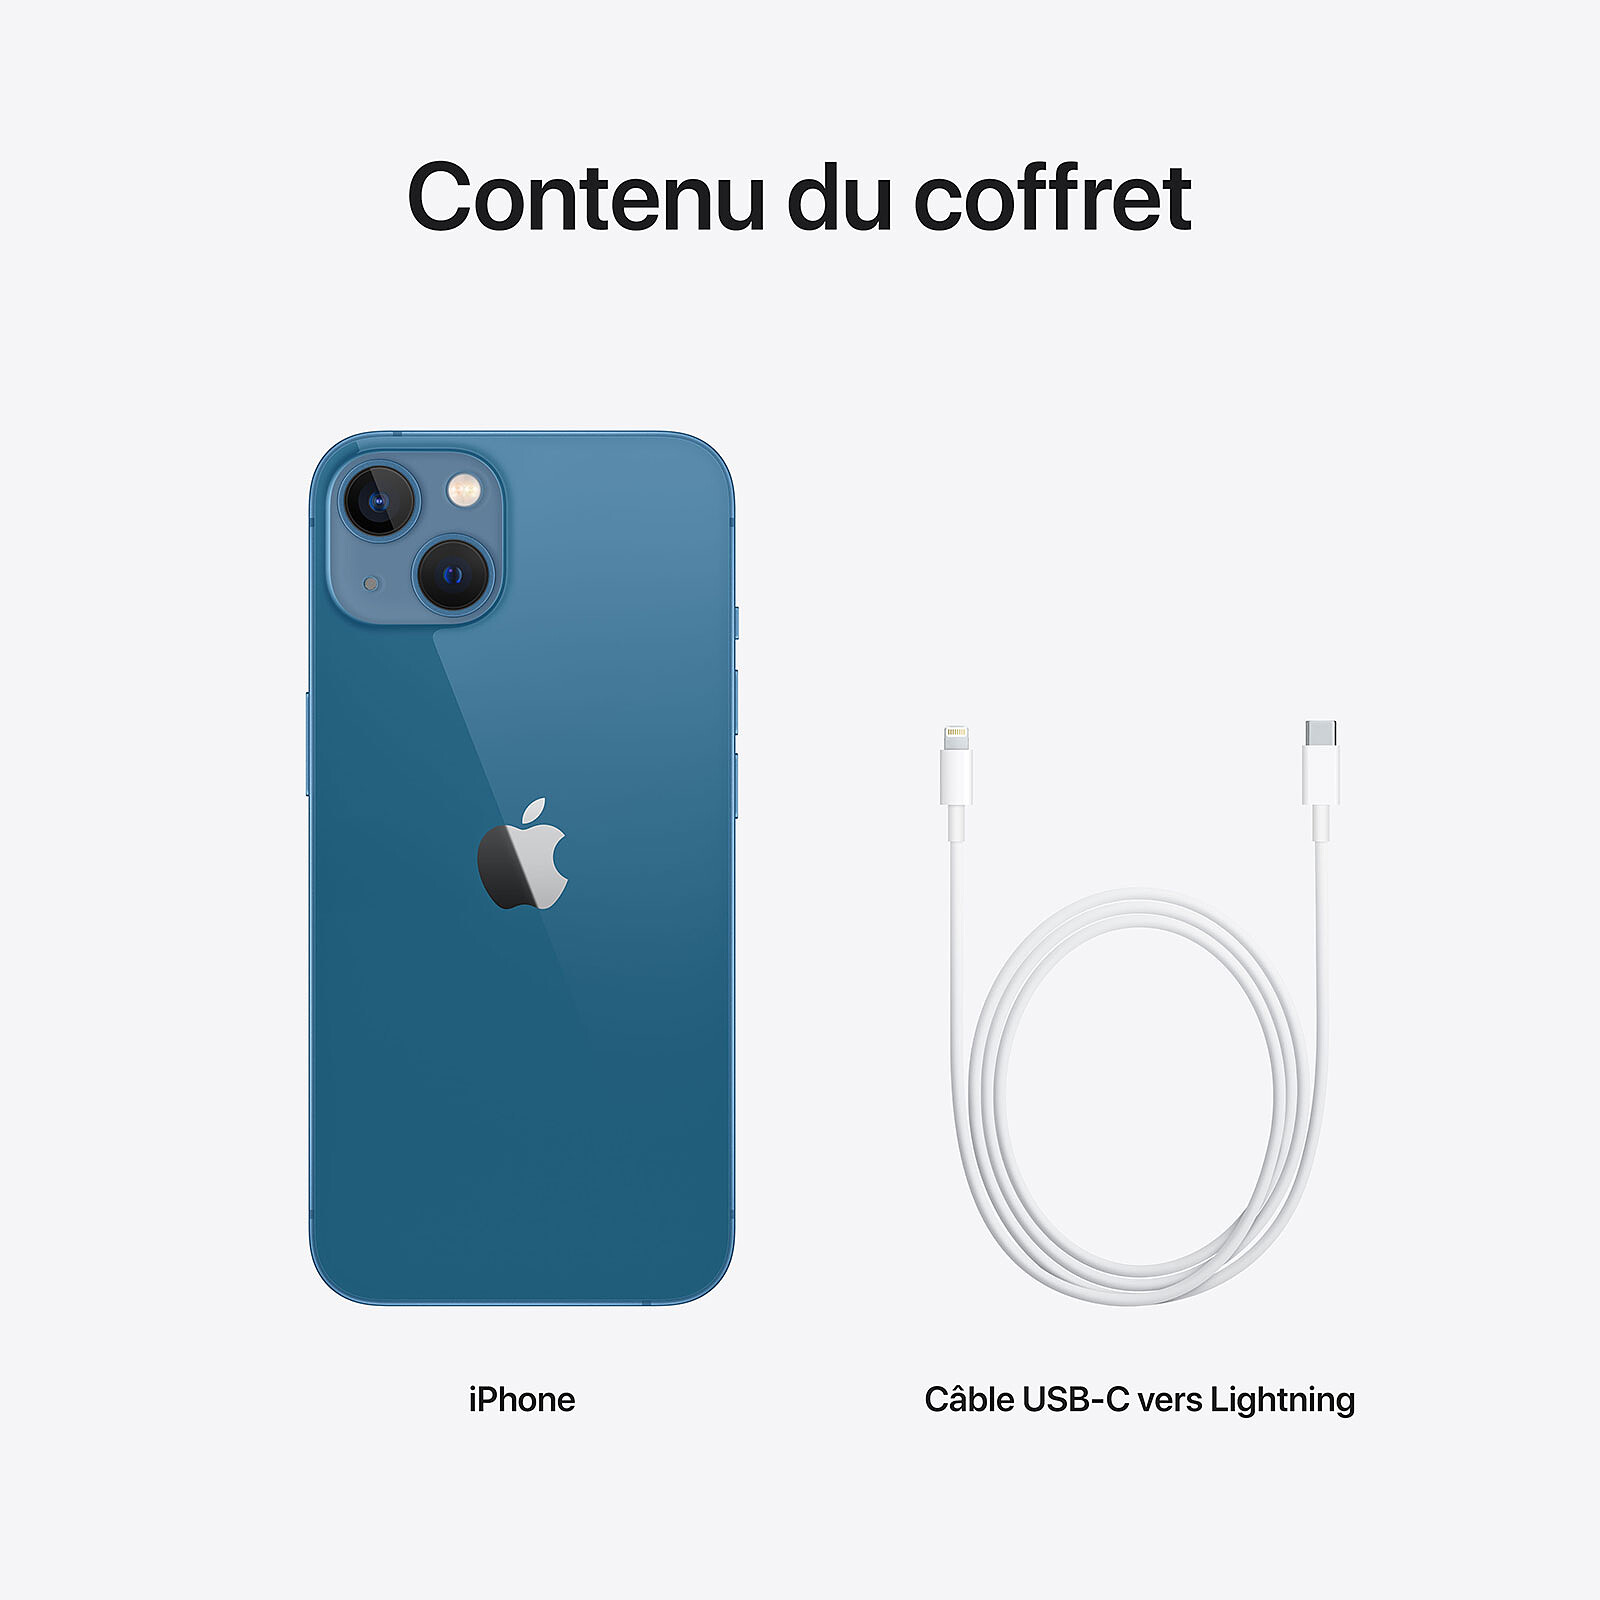 Apple iPhone 12 (128GB, Blue)